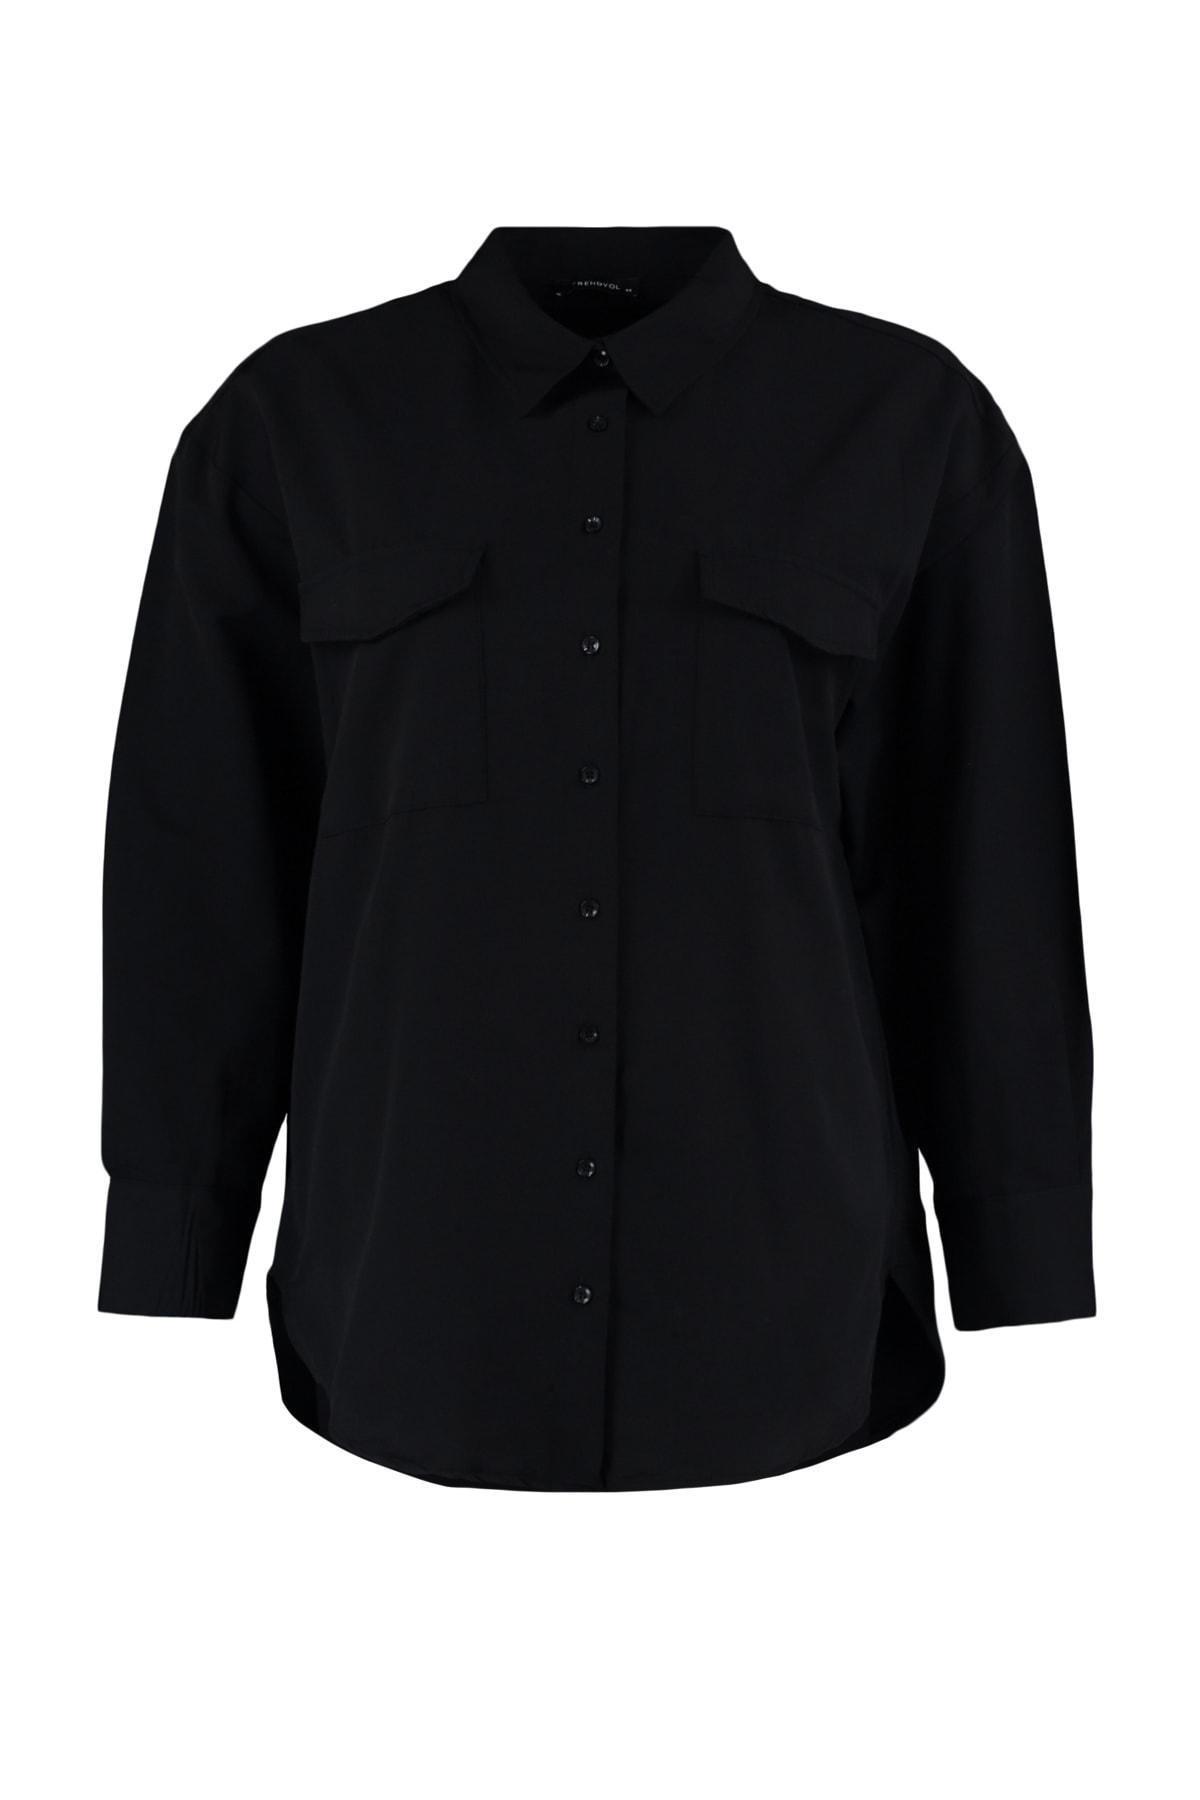 Trendyol - Black Oversize Plus Size Shirt